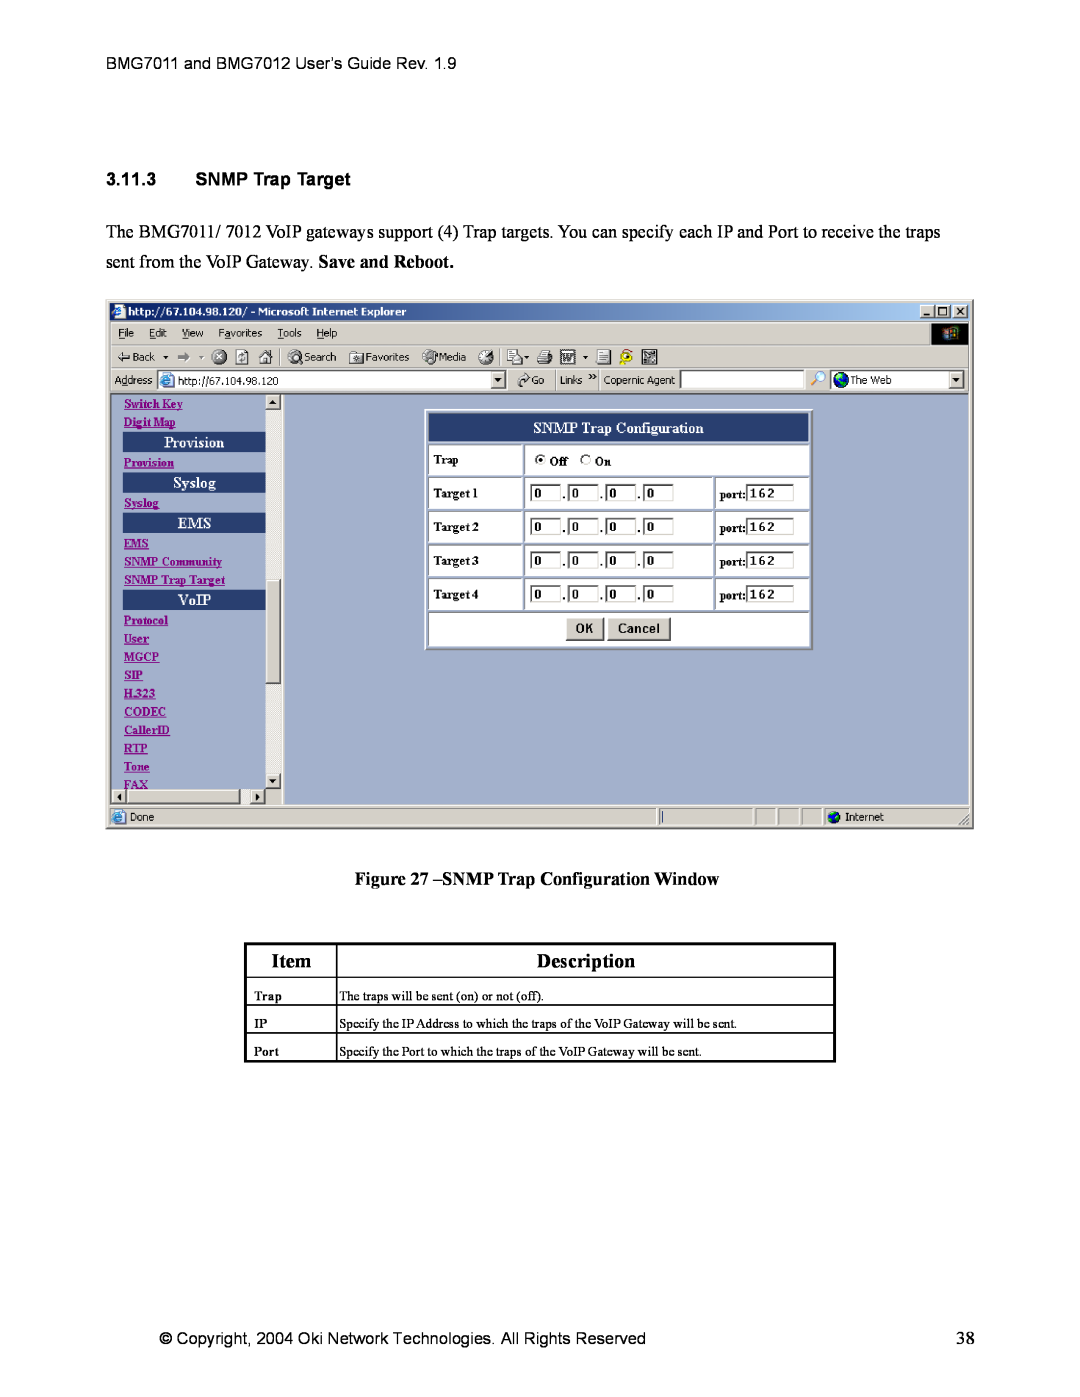 Oki BMG7012, BMG7011 manual 3.11.3SNMP Trap Target, SNMPTrap Configuration Window, Description 